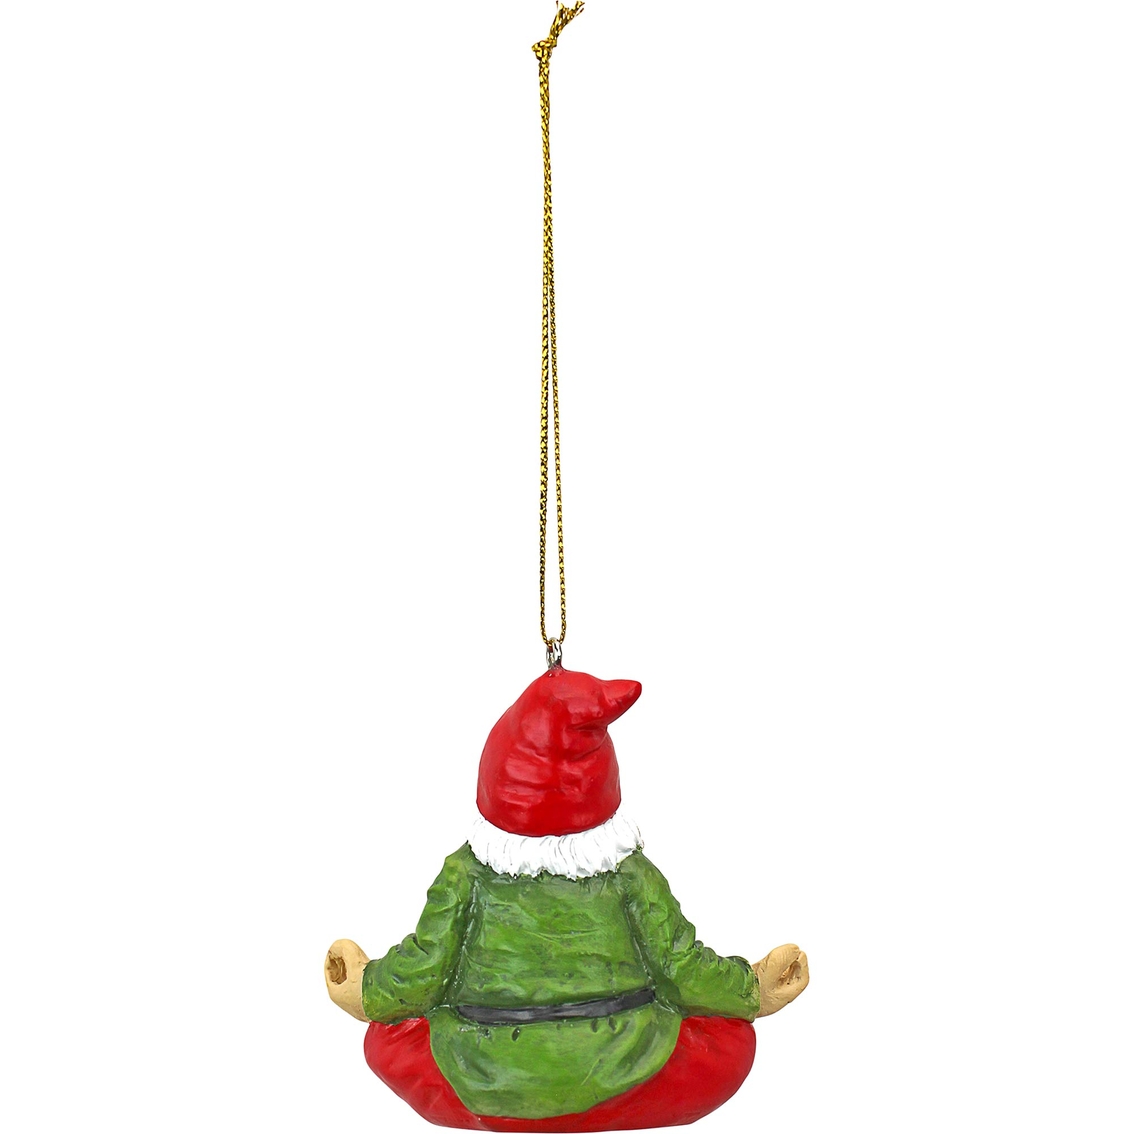 Design Toscano Zen Gnome Holiday Ornament - Image 3 of 4